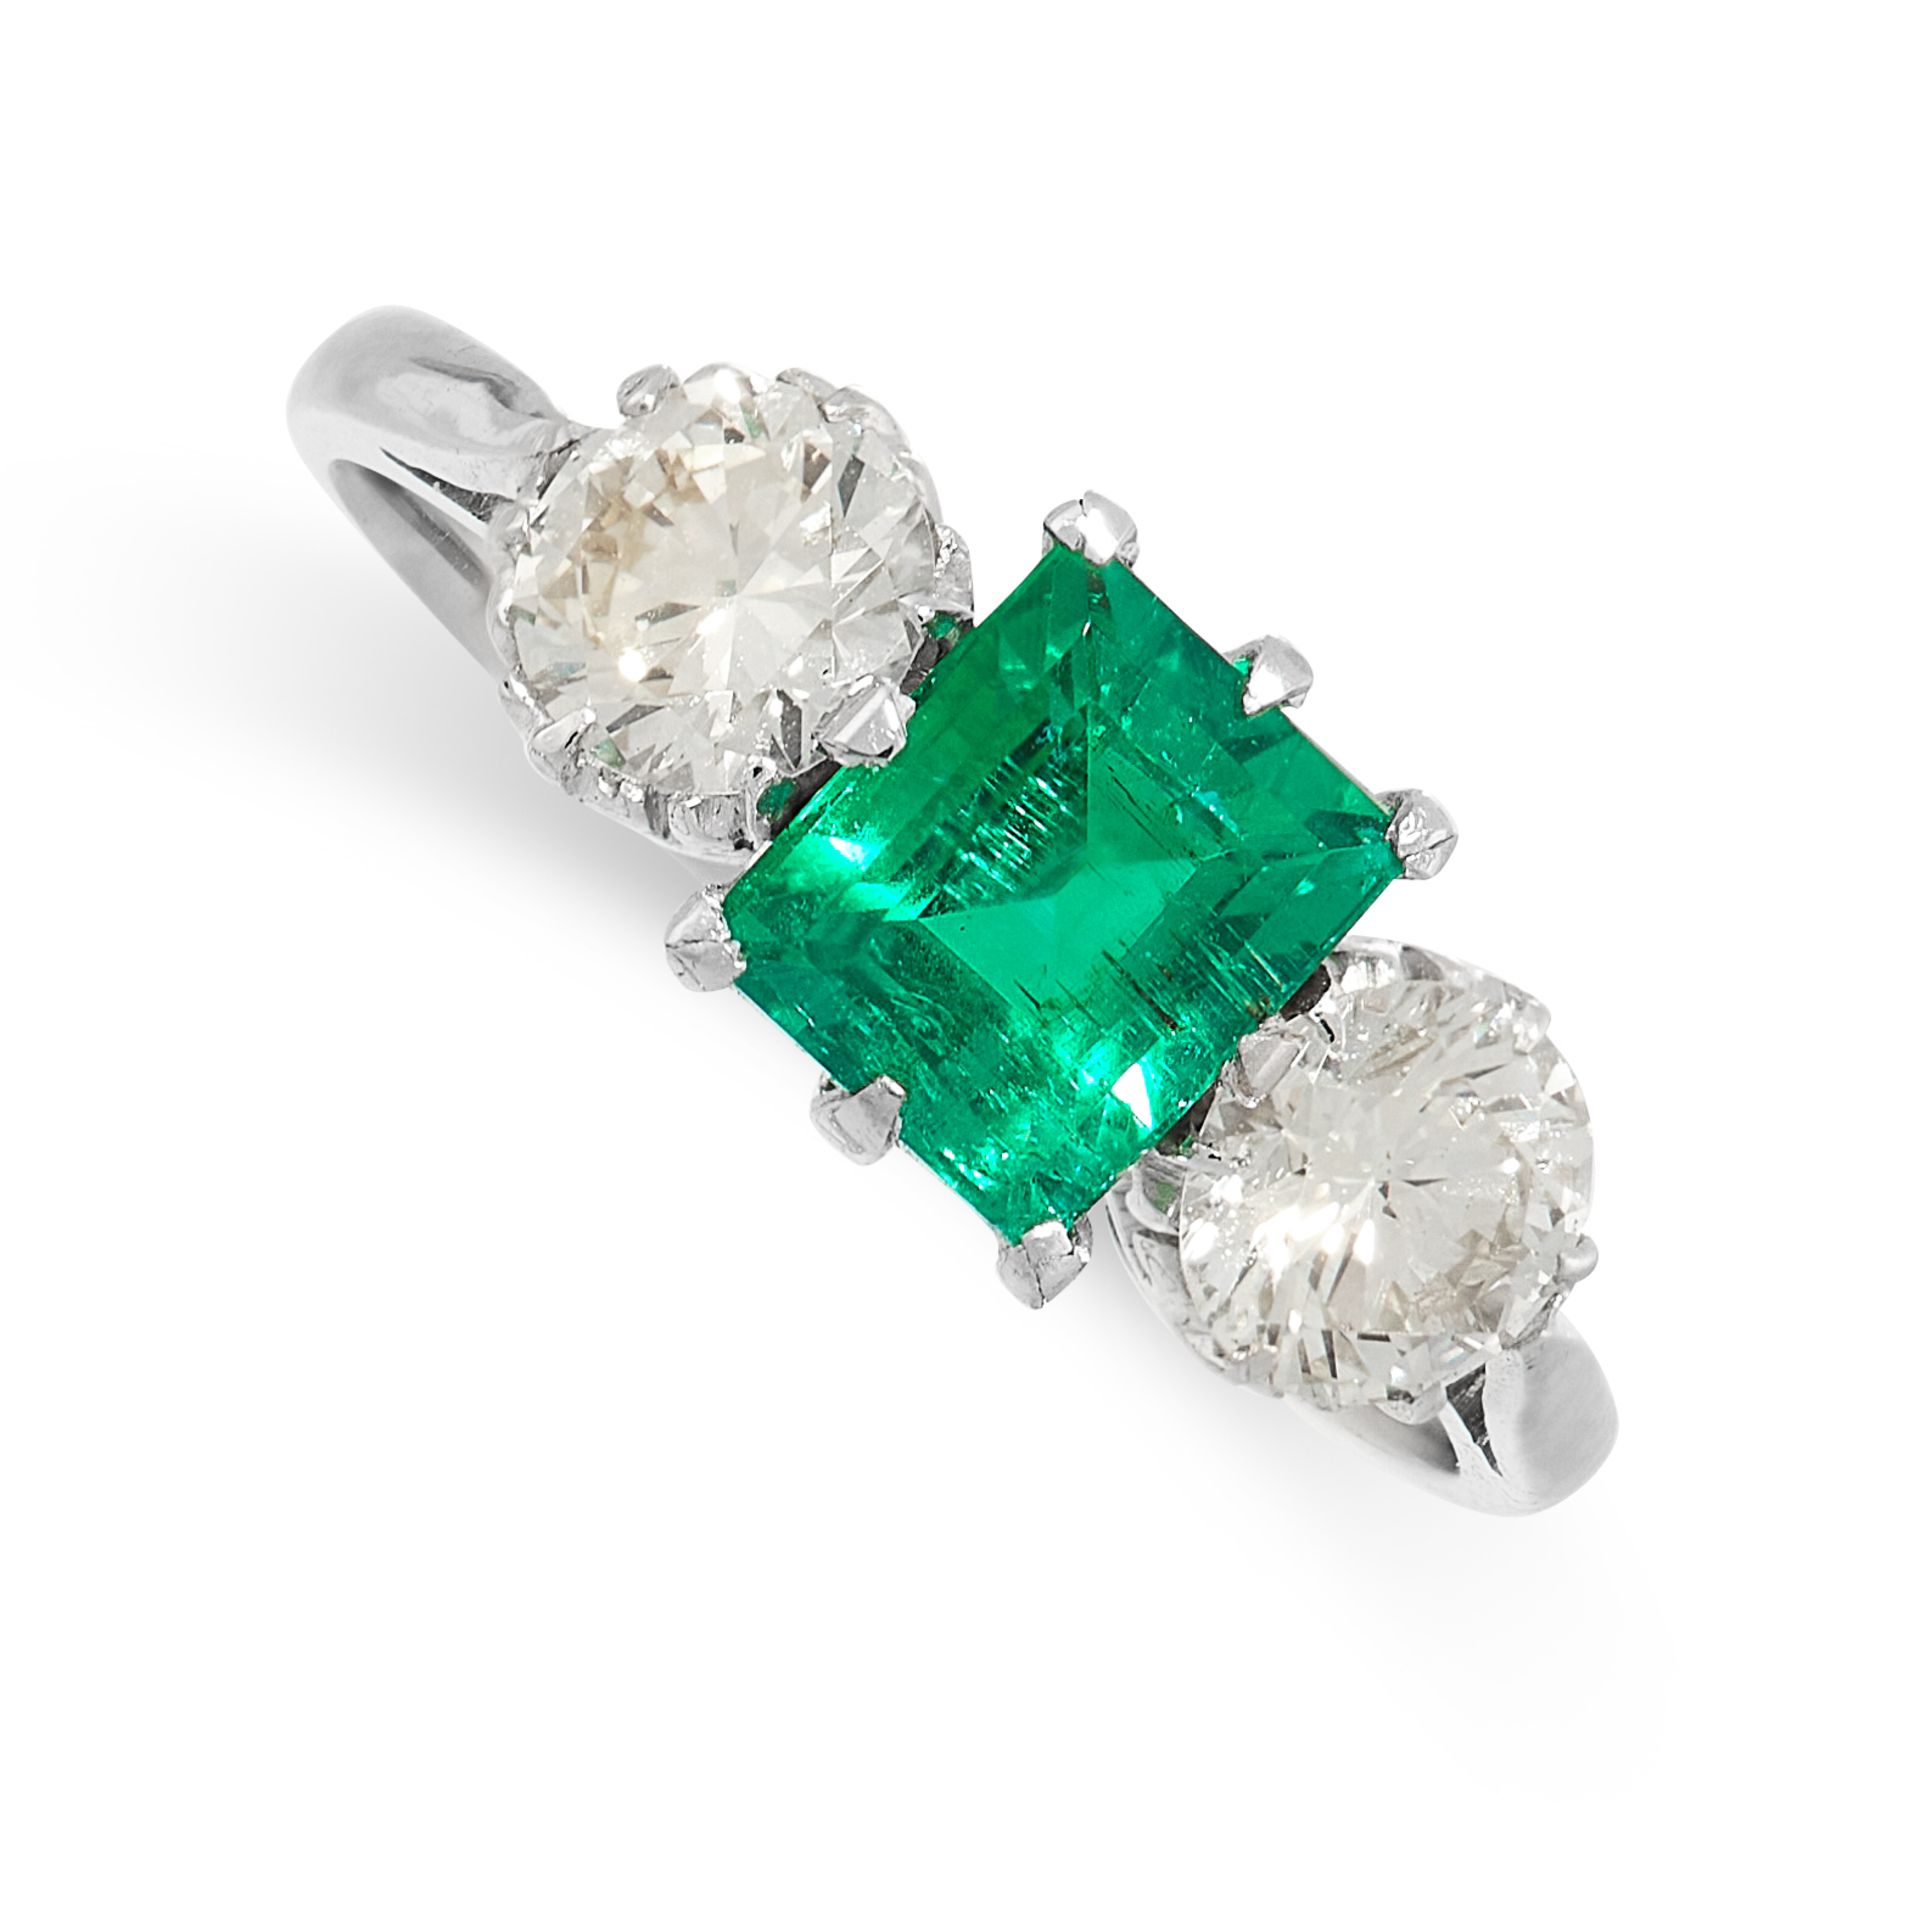 AN EMERALD AND DIAMOND DRESS RING set with a rectangular step cut emerald of 1.19 carats, between